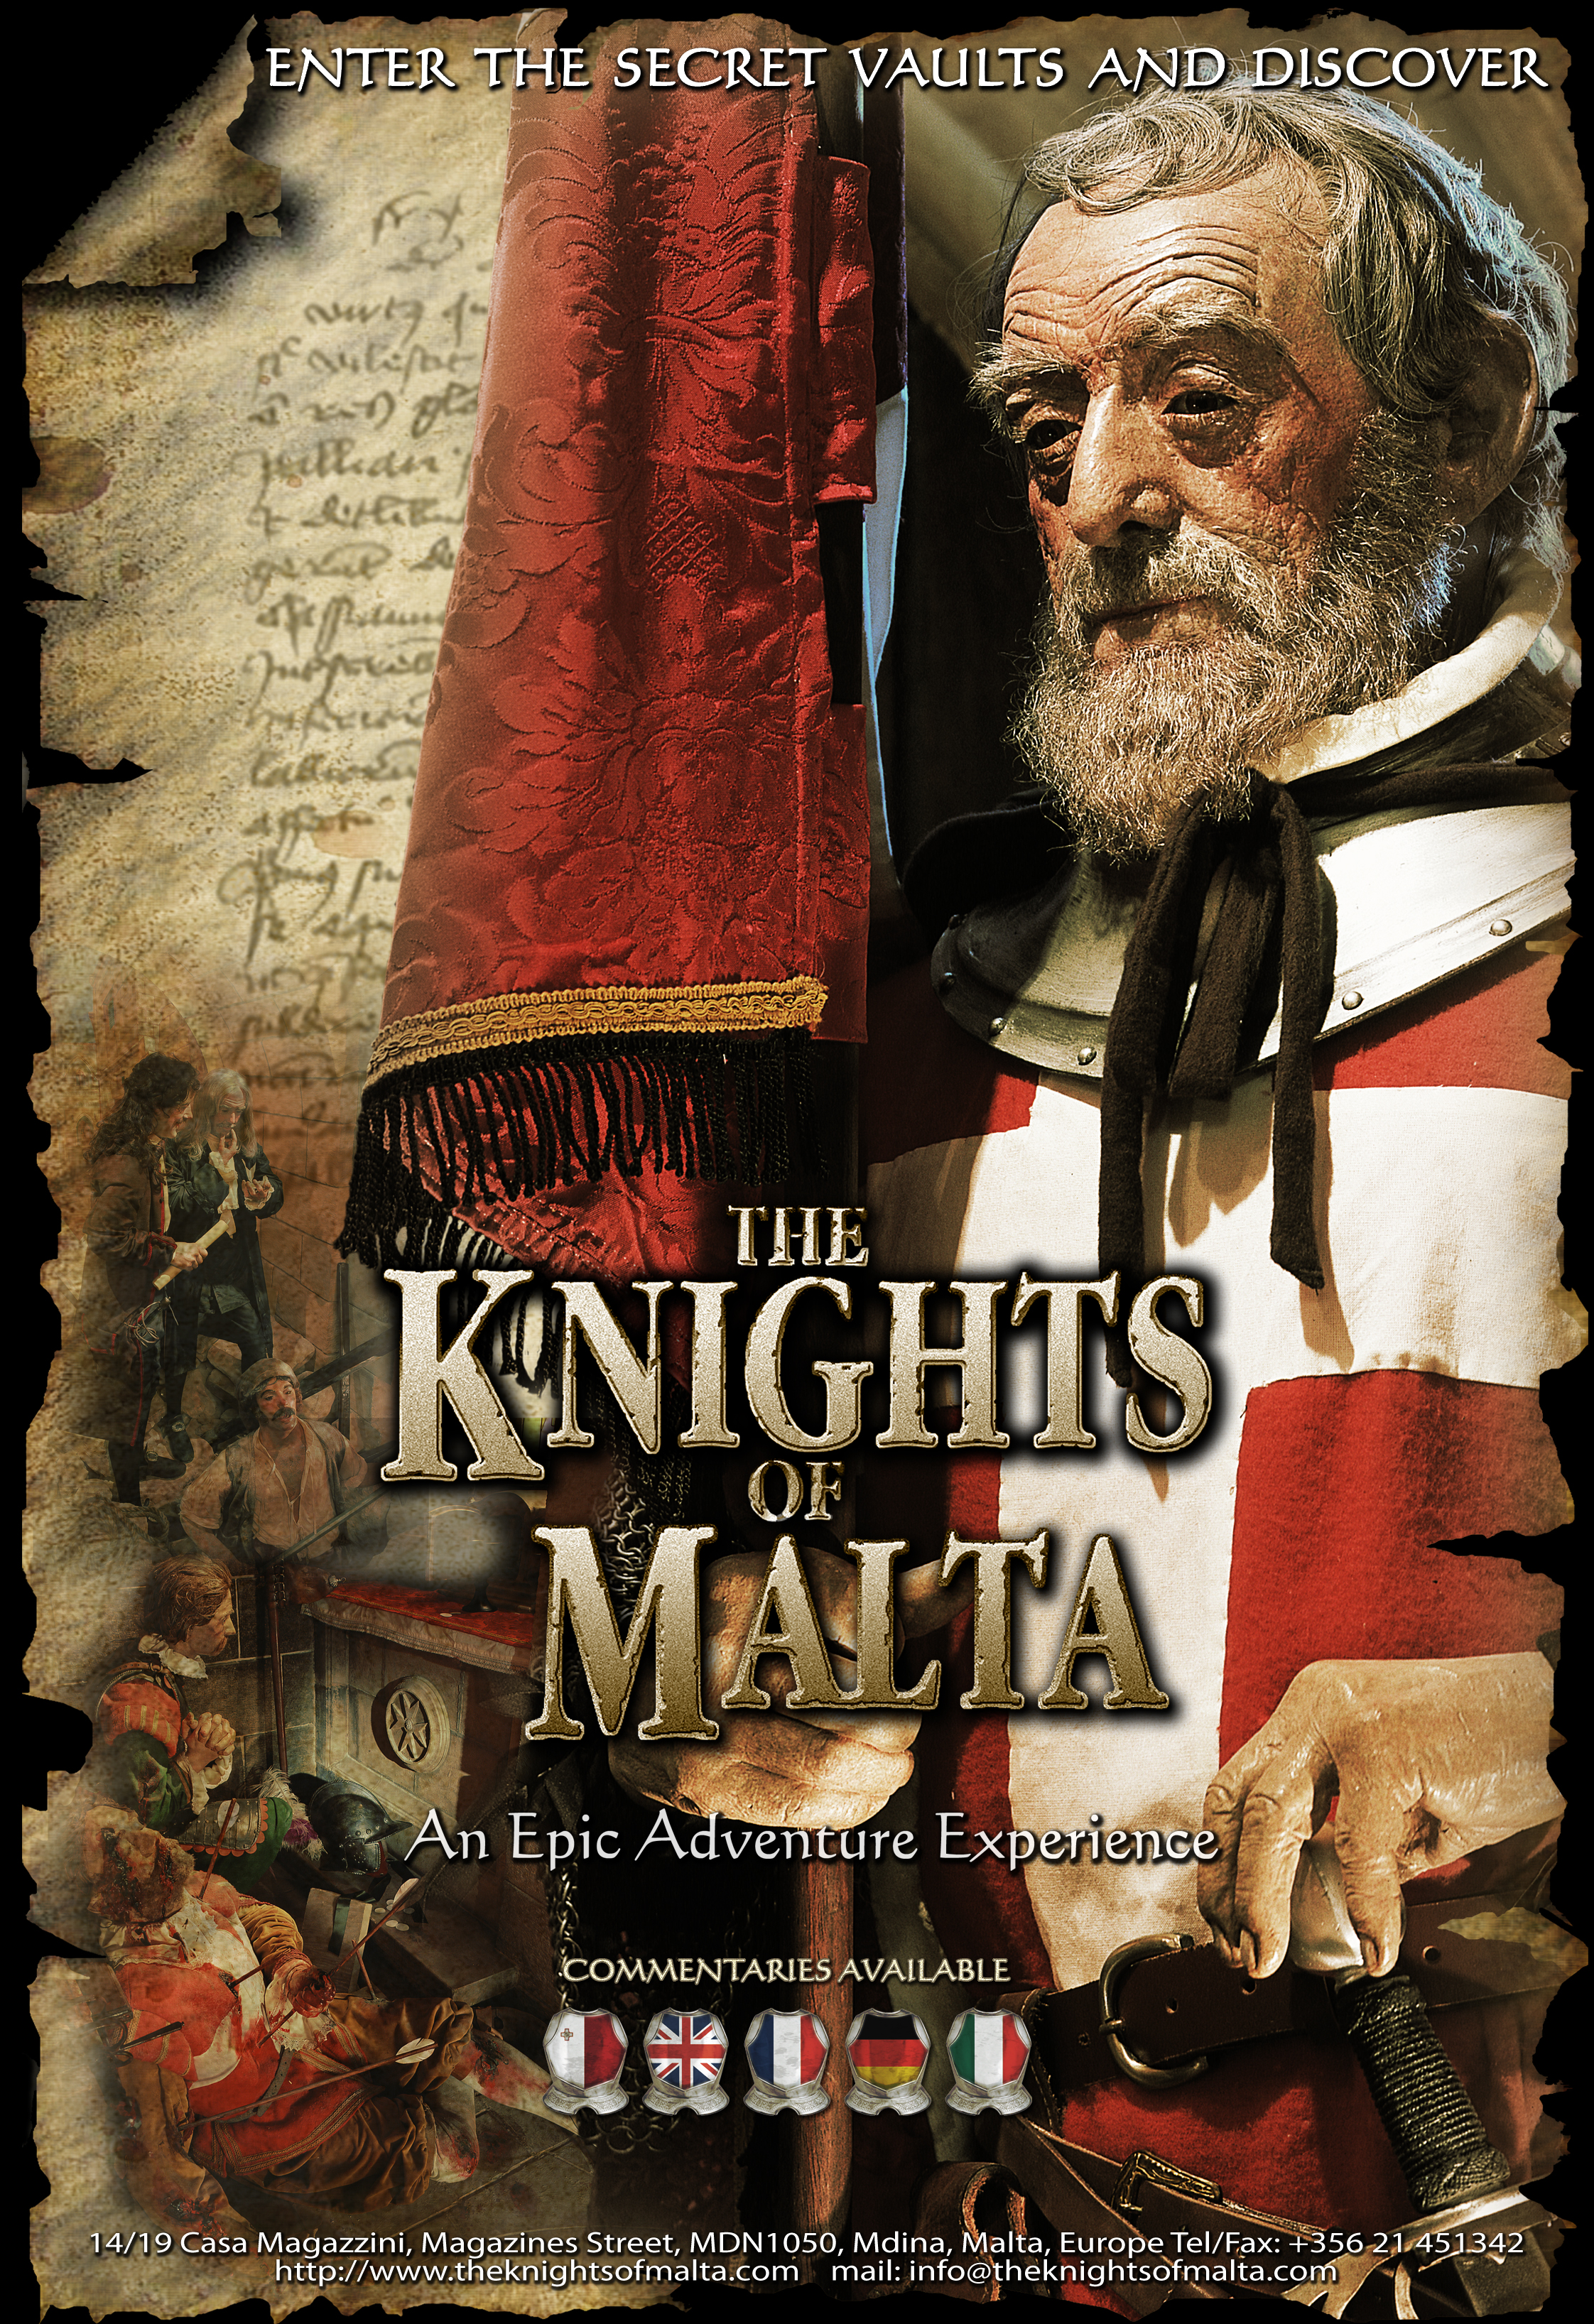 The Knights of Malta Mdina - Maltapass top attractions Guide - malta discount card - malta and gozo holiday guide